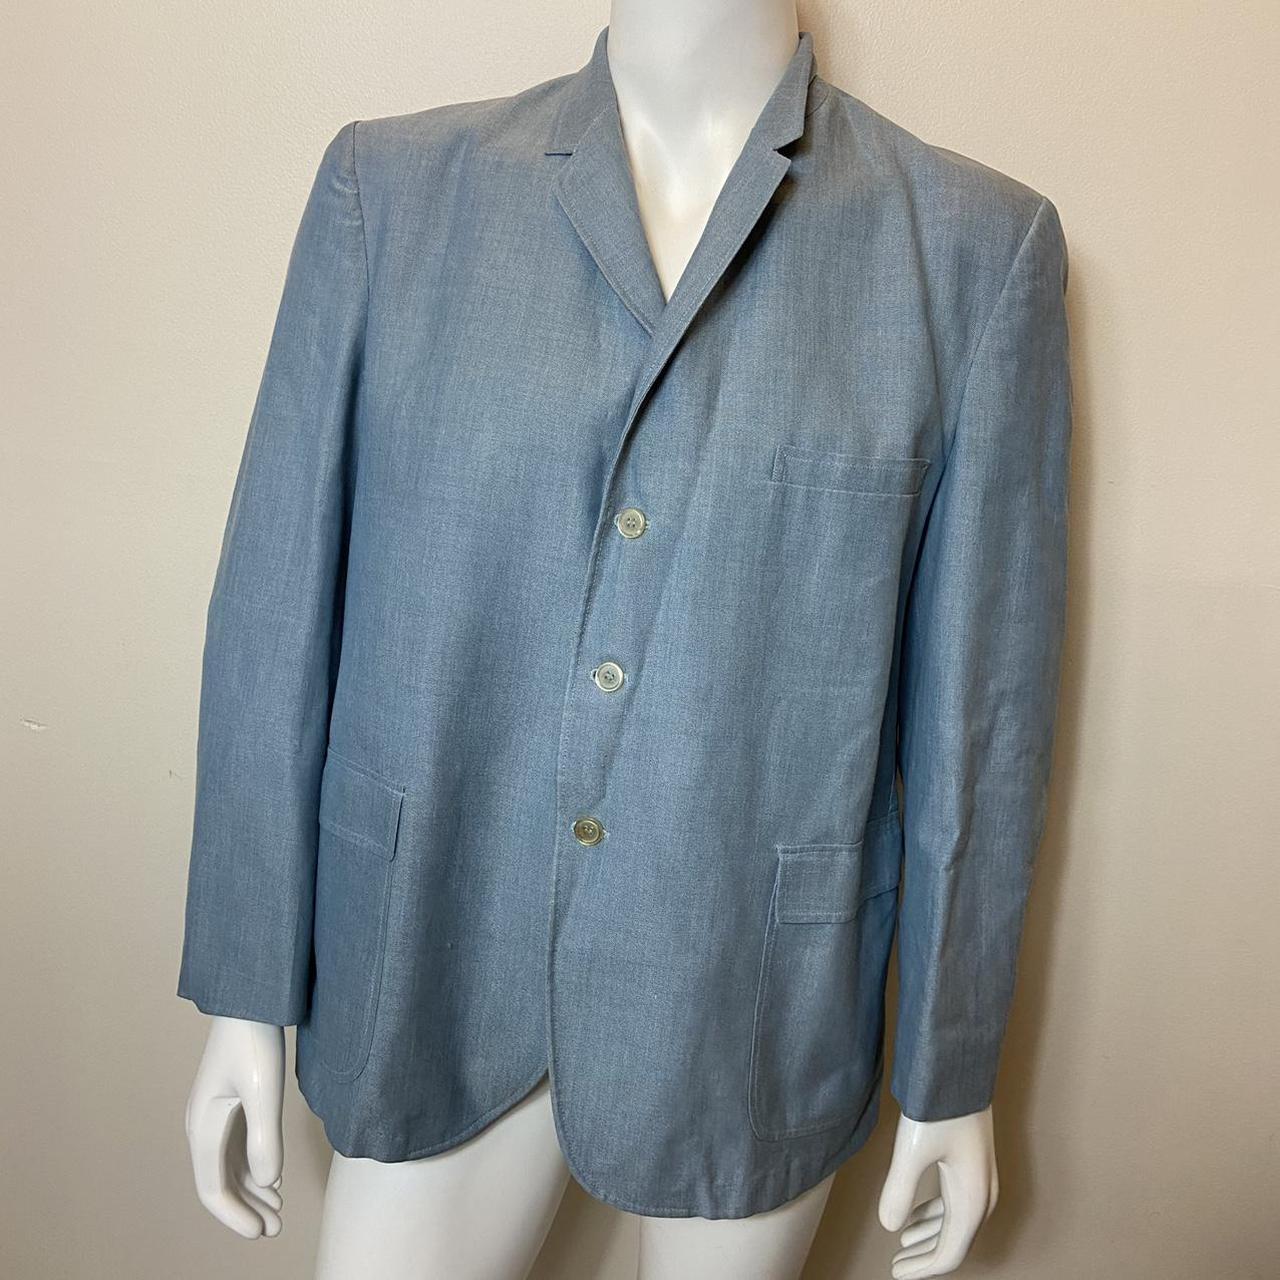 Vintage 1960s men’s blazer in a pale blue - striped... - Depop